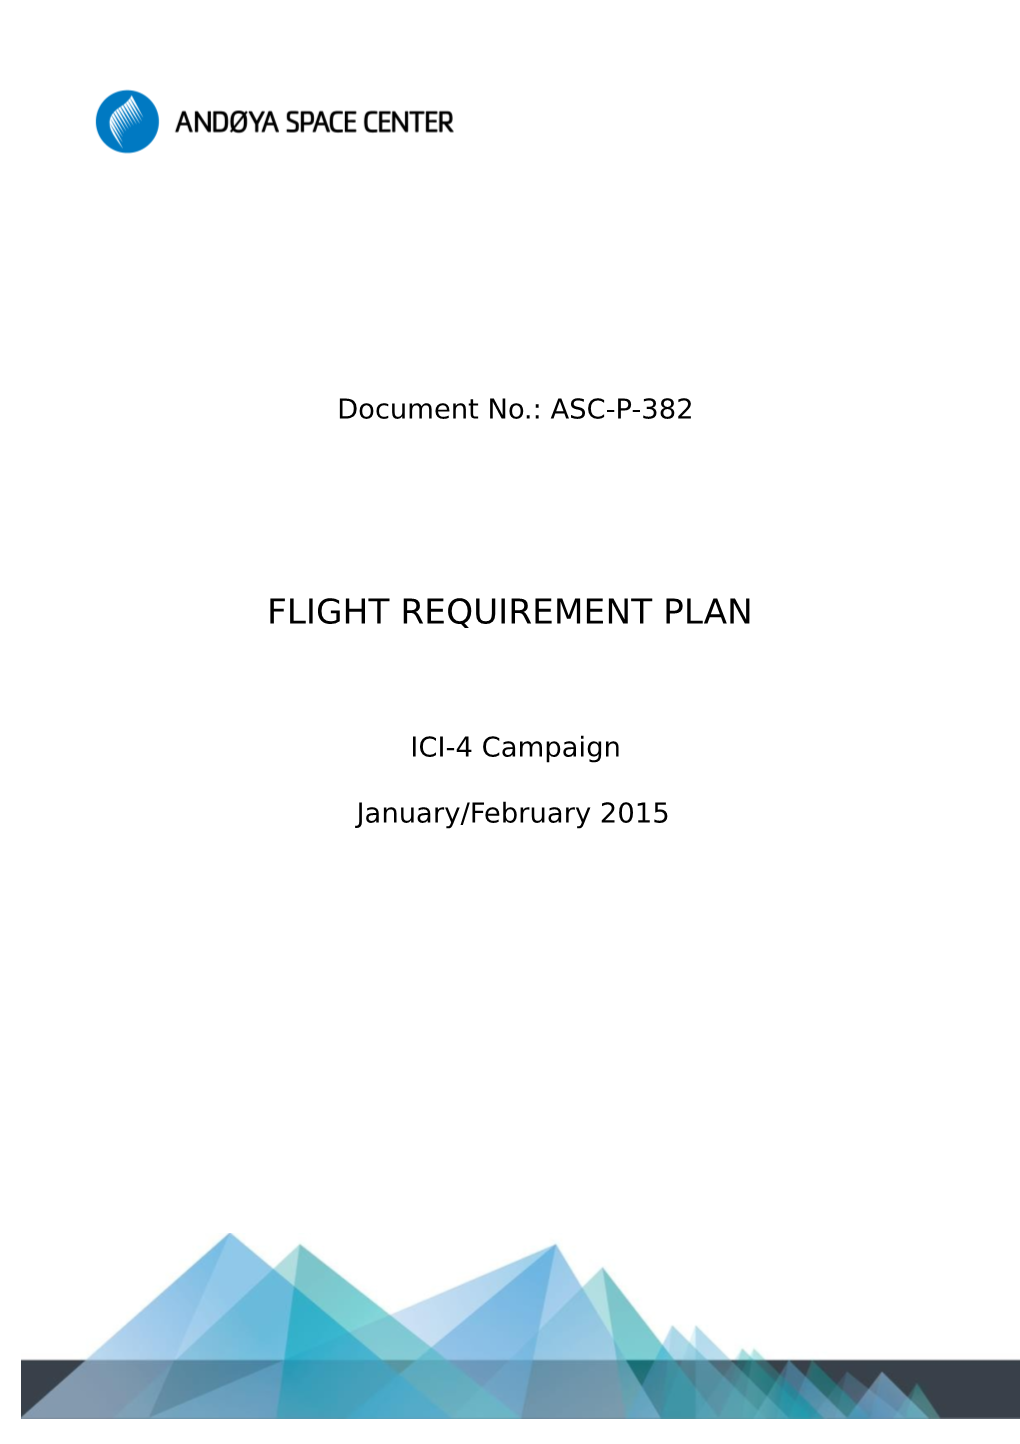 Flight Requirement Plan